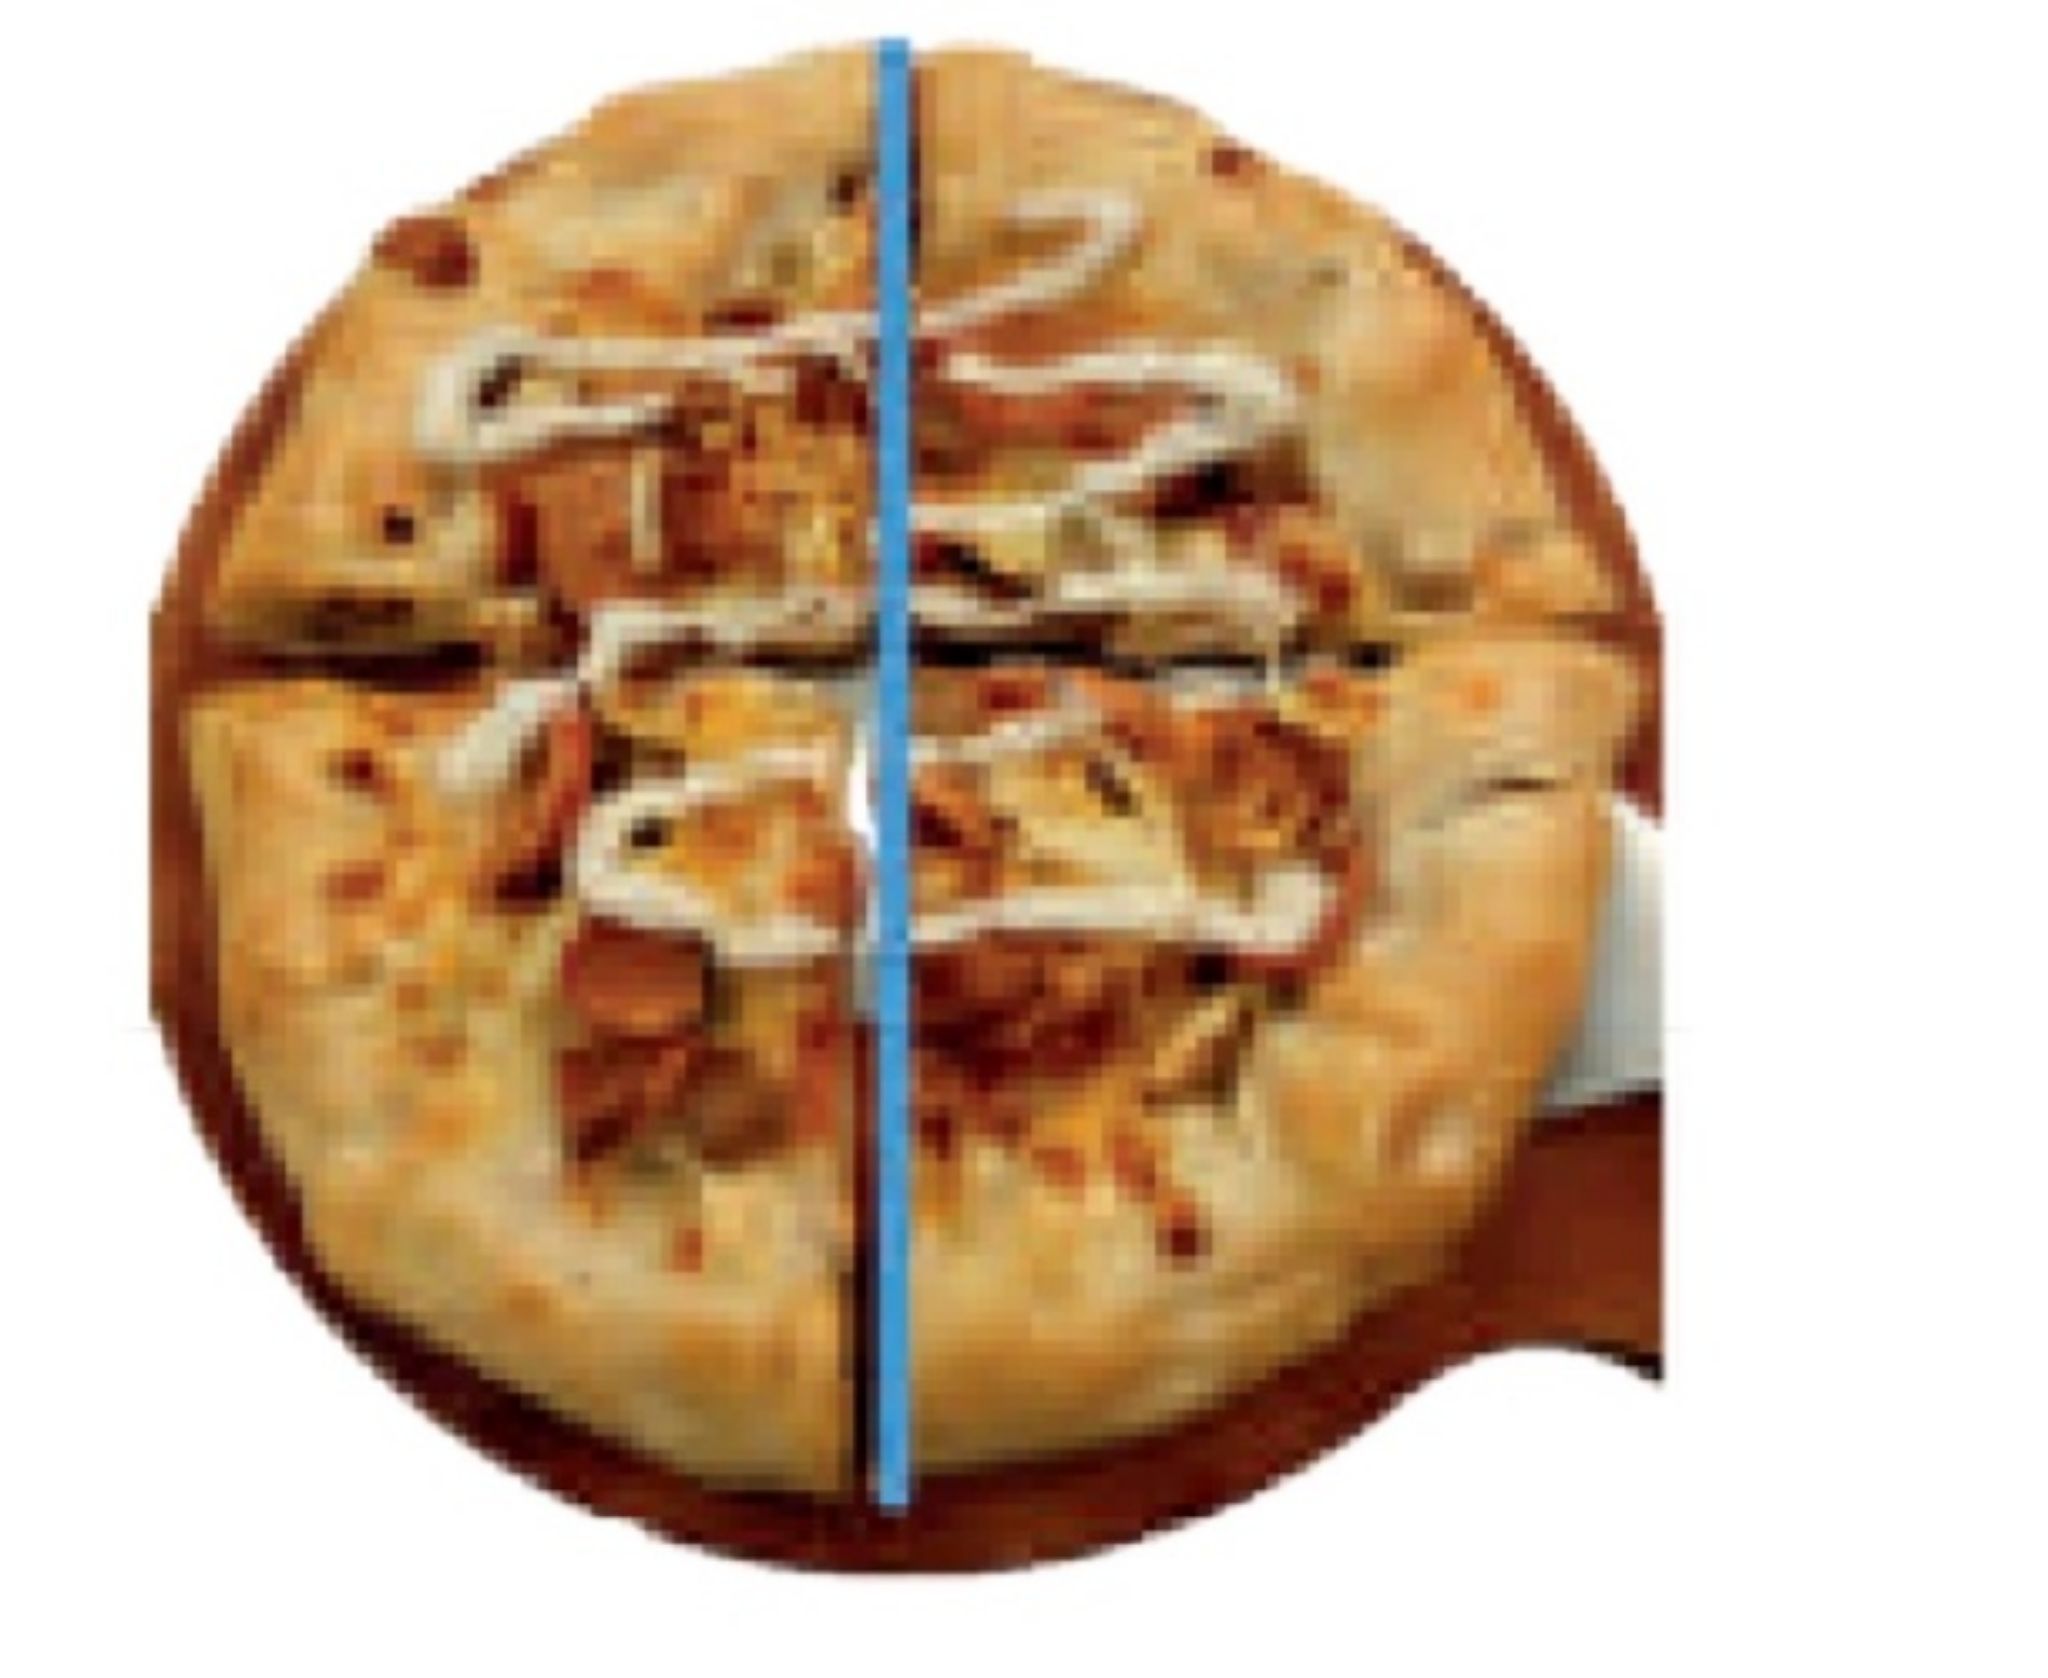 Perhatikan gambar 1. Disebut apakah garis yang membelah pizza?Tangkap layar buku Senang Belajar Matematika/Sri Setiyowati/Portal Pekalongan.